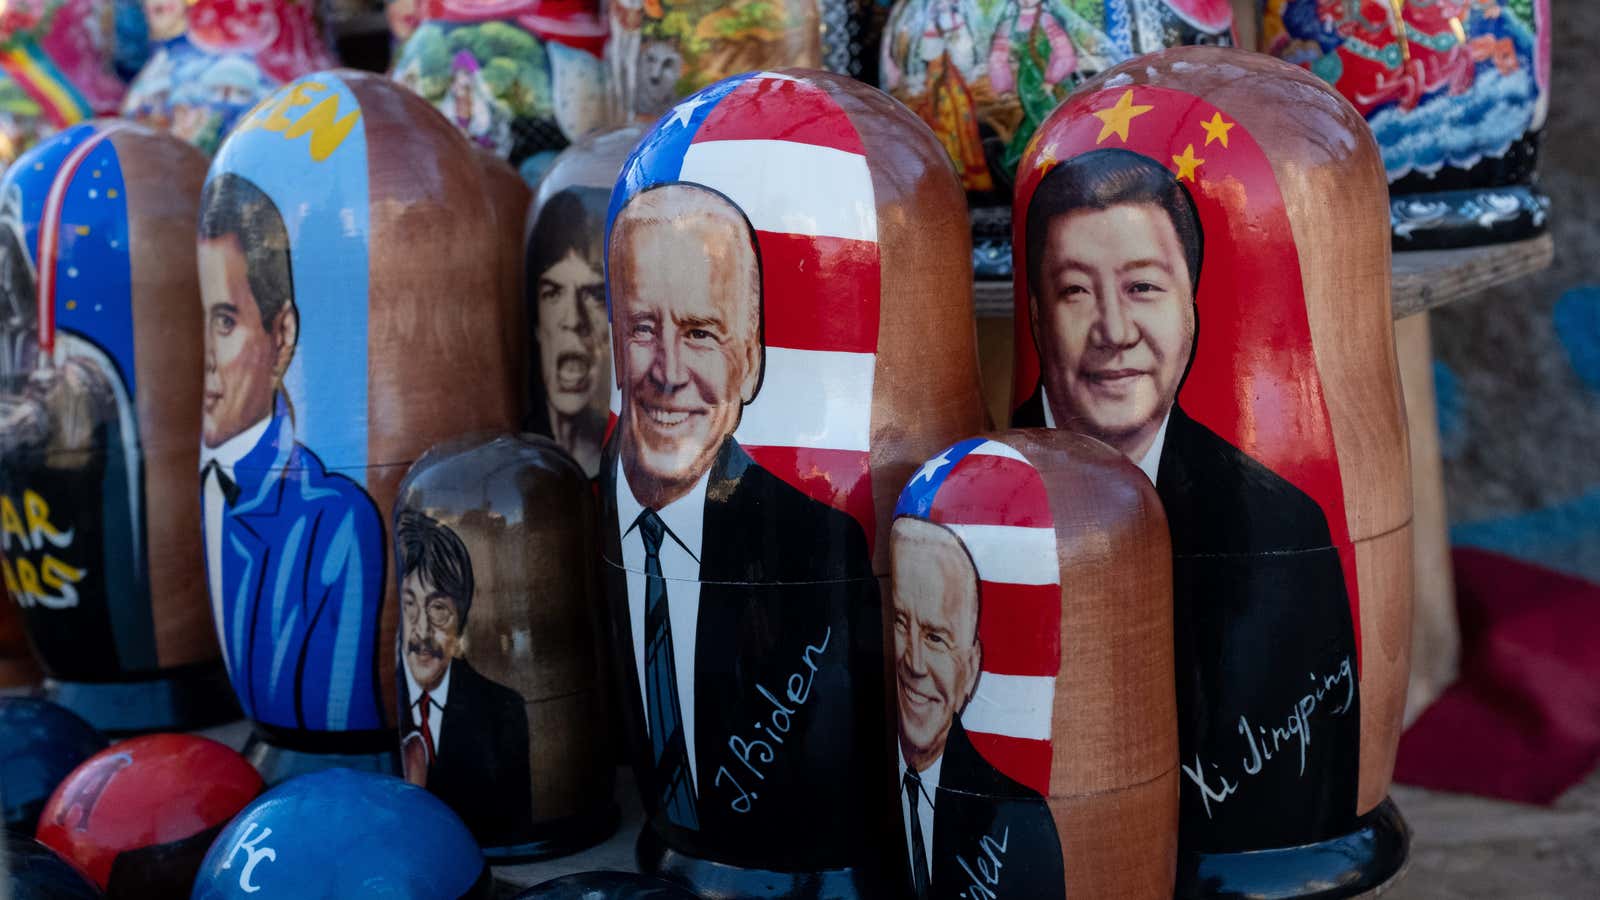 Russian nesting dolls of US President Joe Biden and Chinese leader Xi Jinping